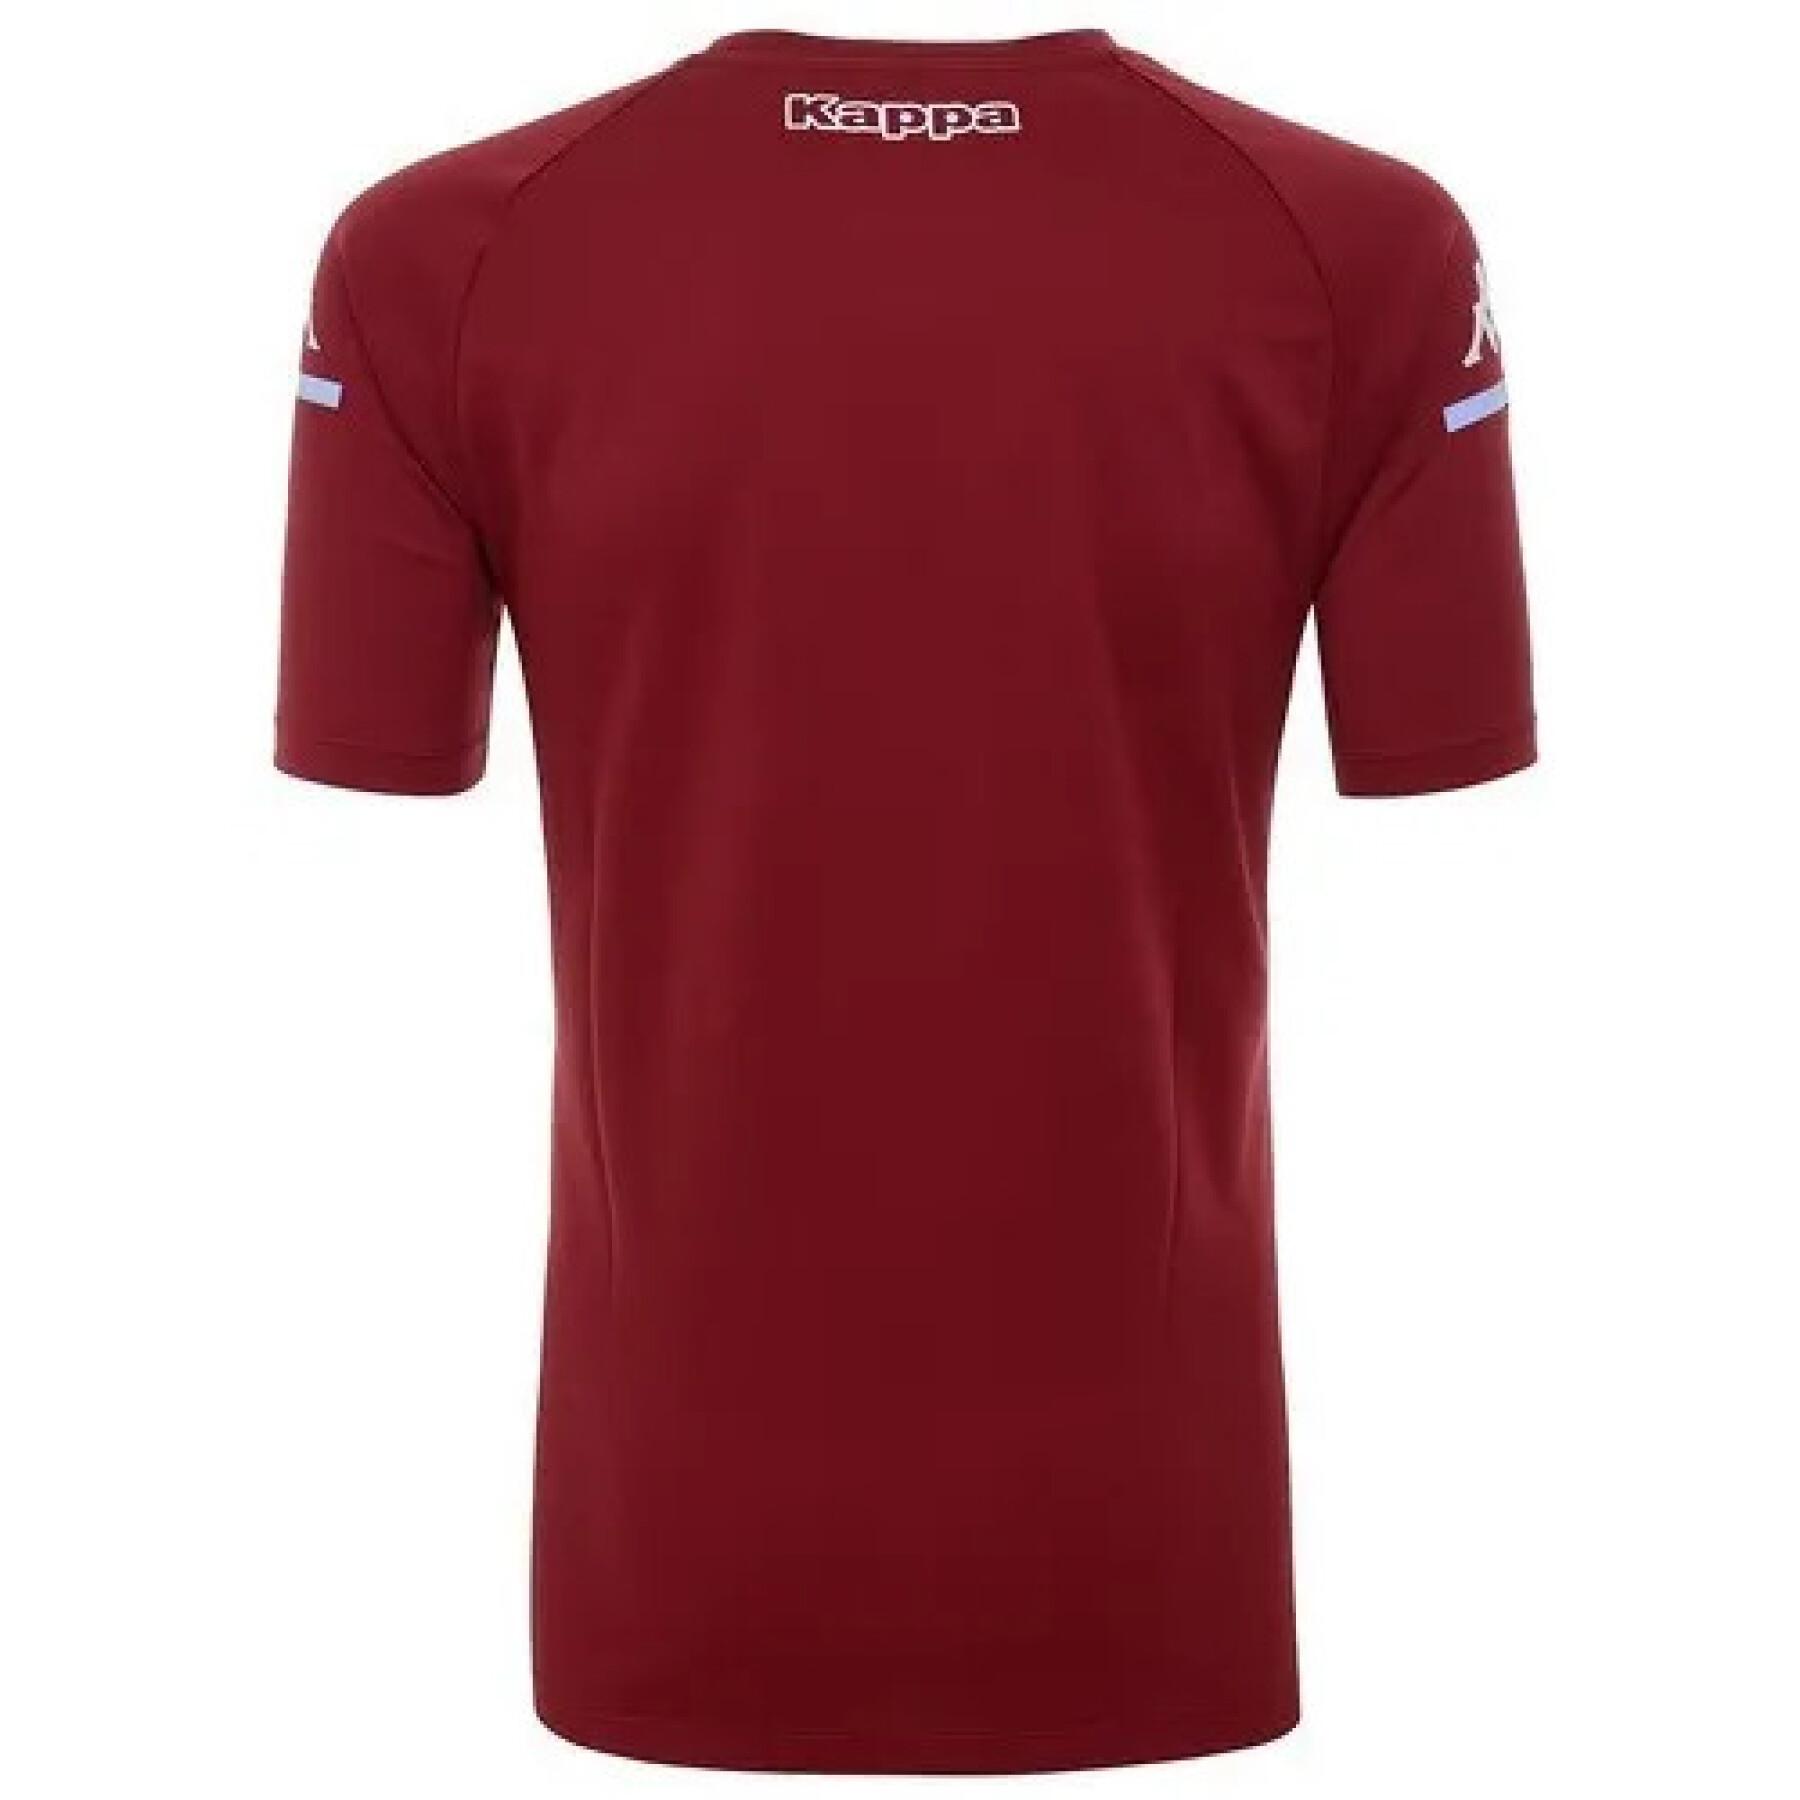 T-shirt Aston Villa FC 2020/21 aboupres pro 4